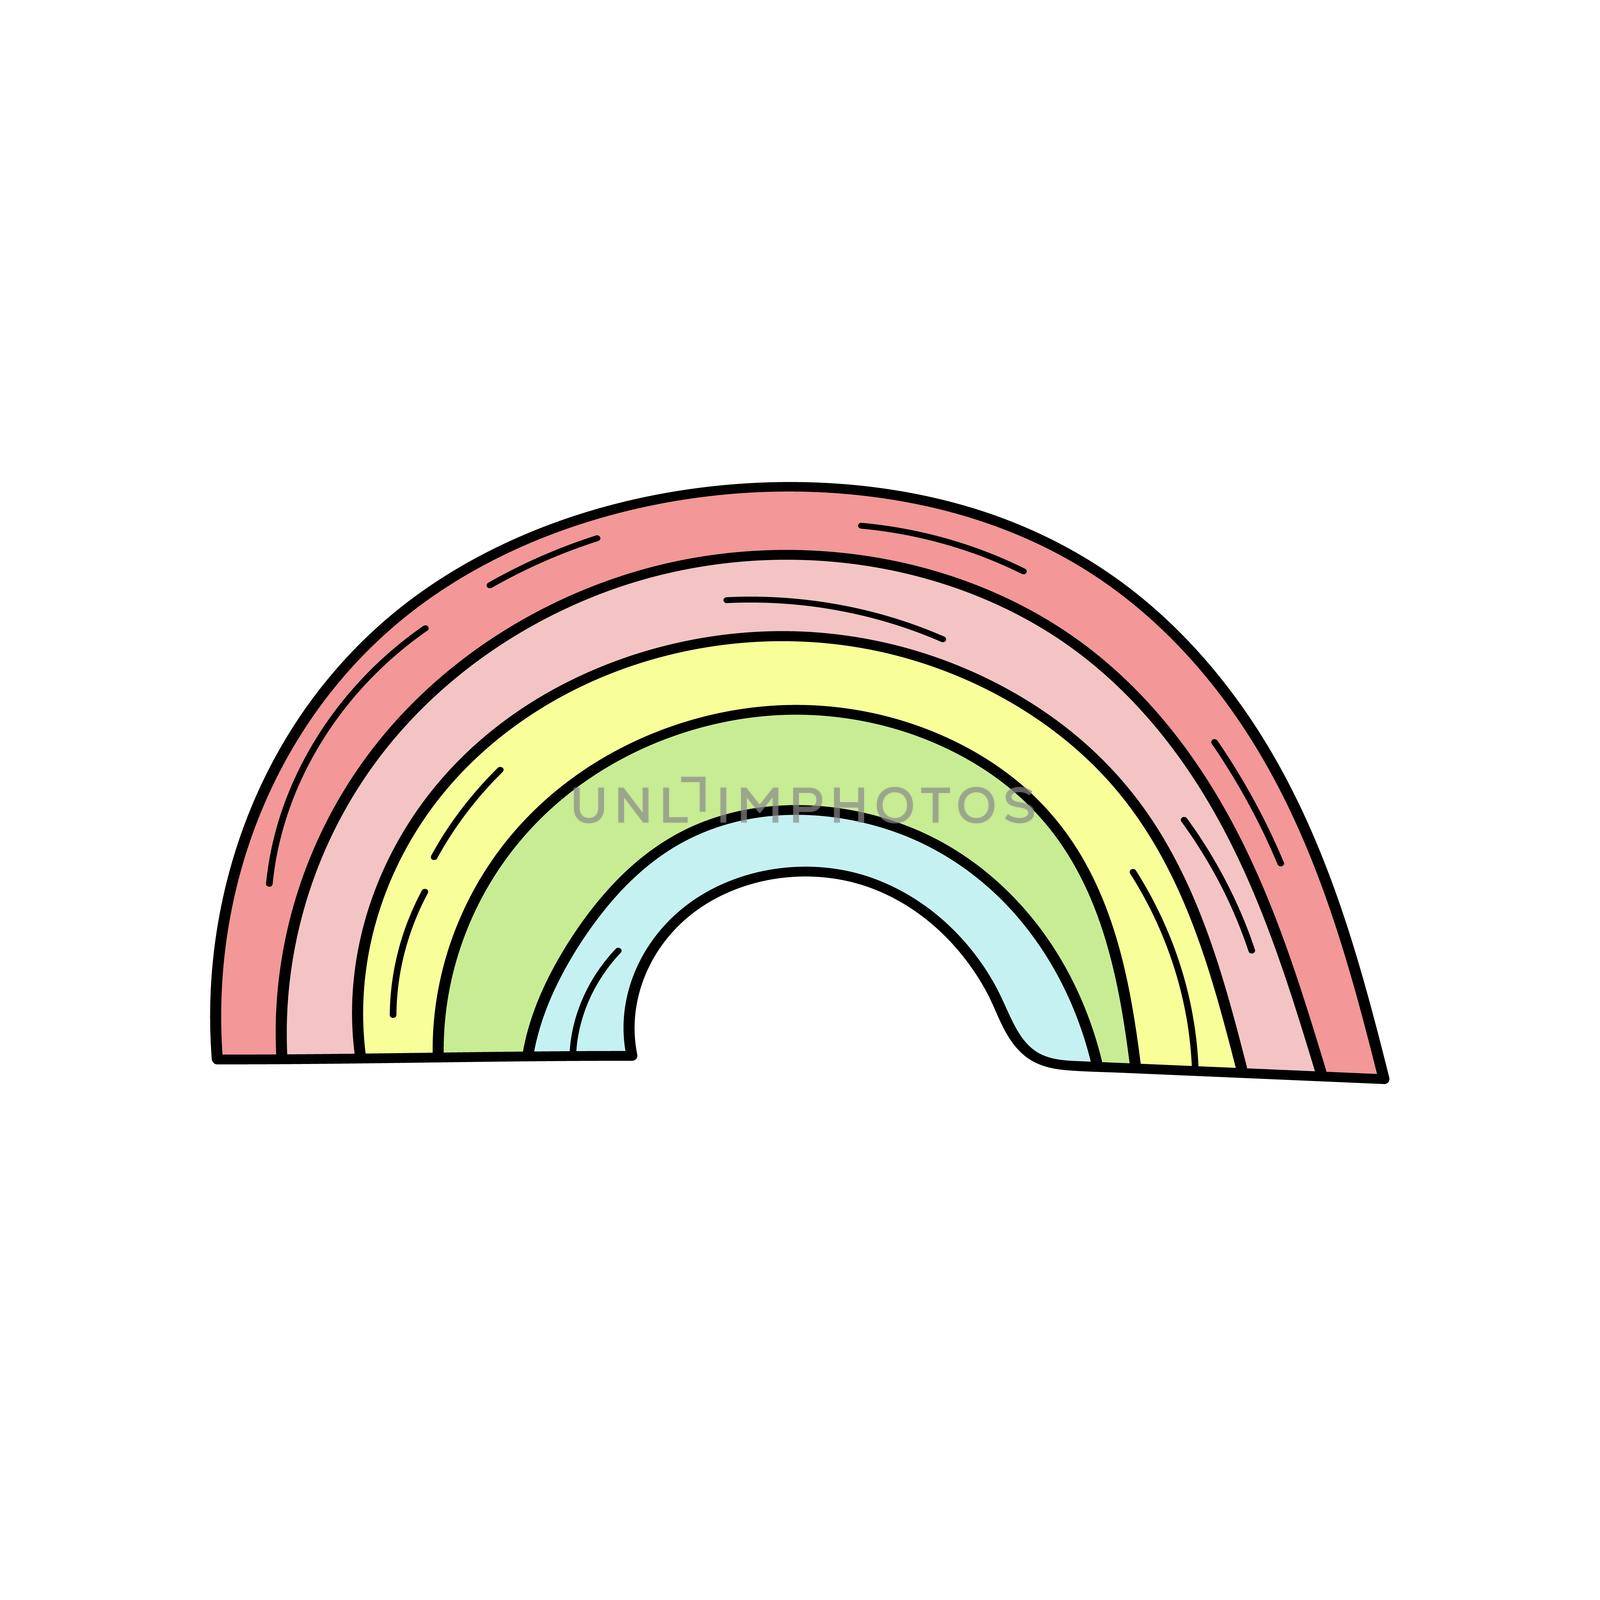 Simple Rainbow Doodle icon. Simple hand drawn rainbow icon on white